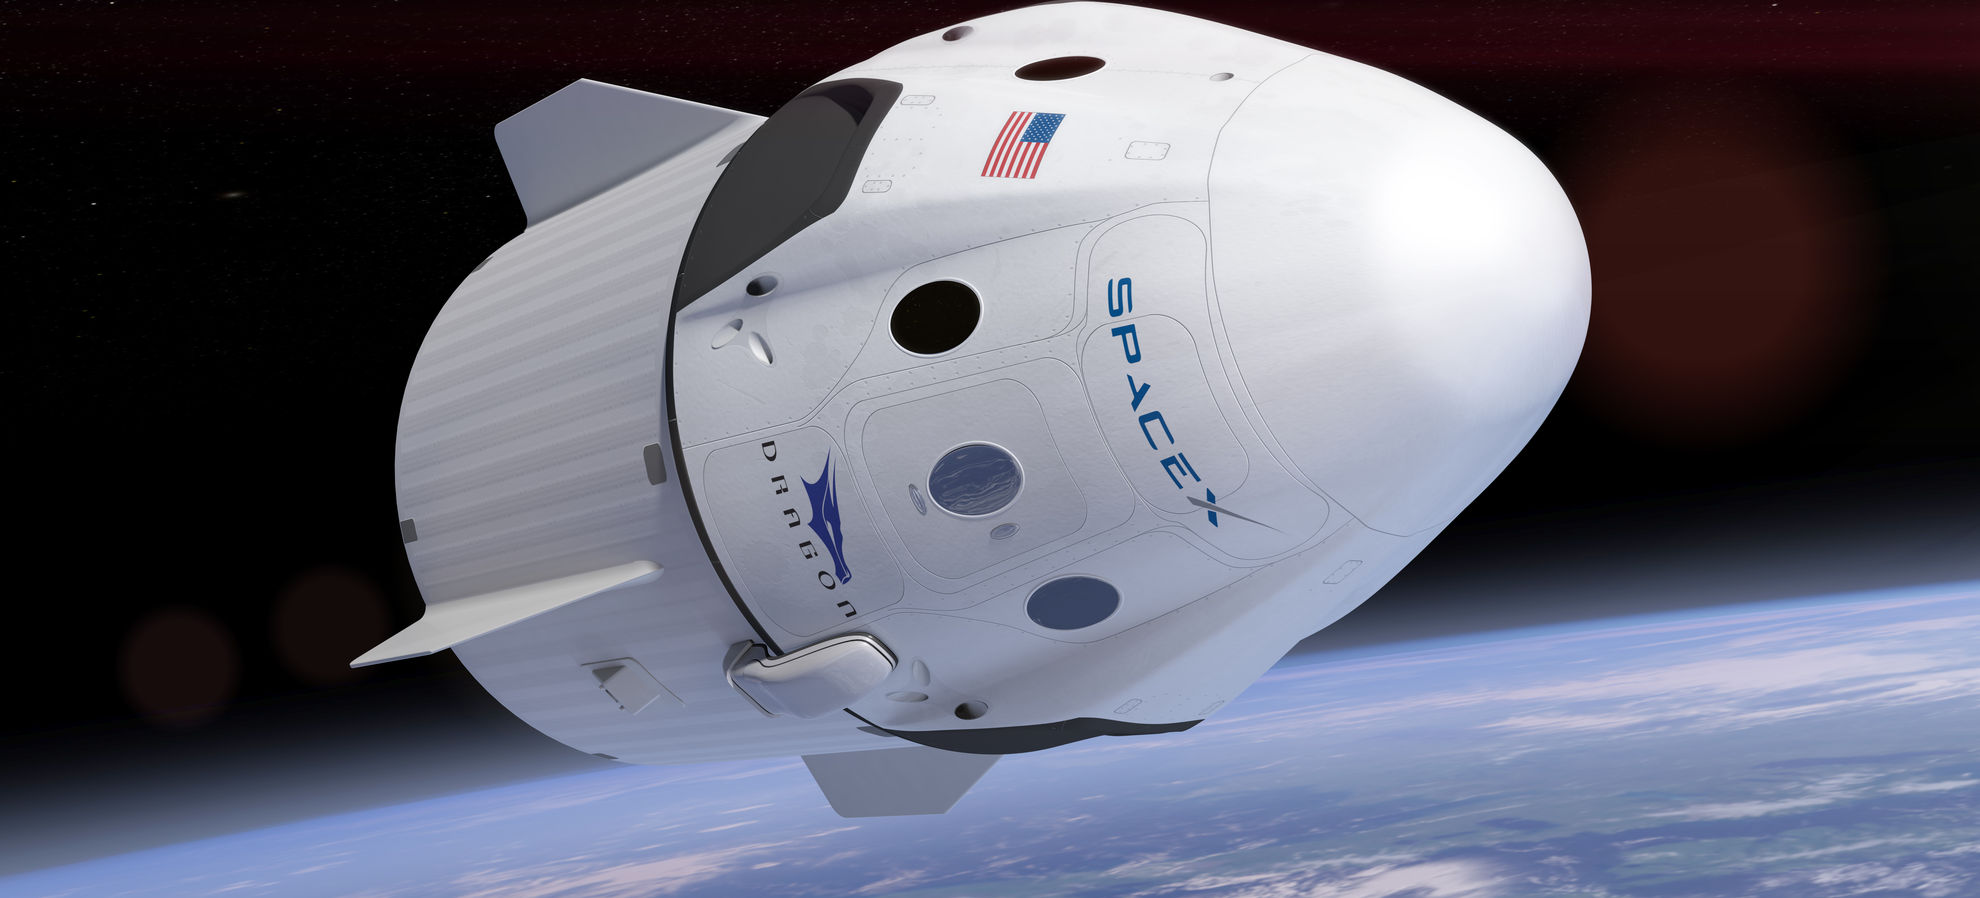 Iστορική στιγμή: Στον Διεθνή Διαστημικό Σταθμό το Crew Dragon της SpaceX – Έφτασε μετά από ταξίδι 27,5 ωρών (βίντεο)